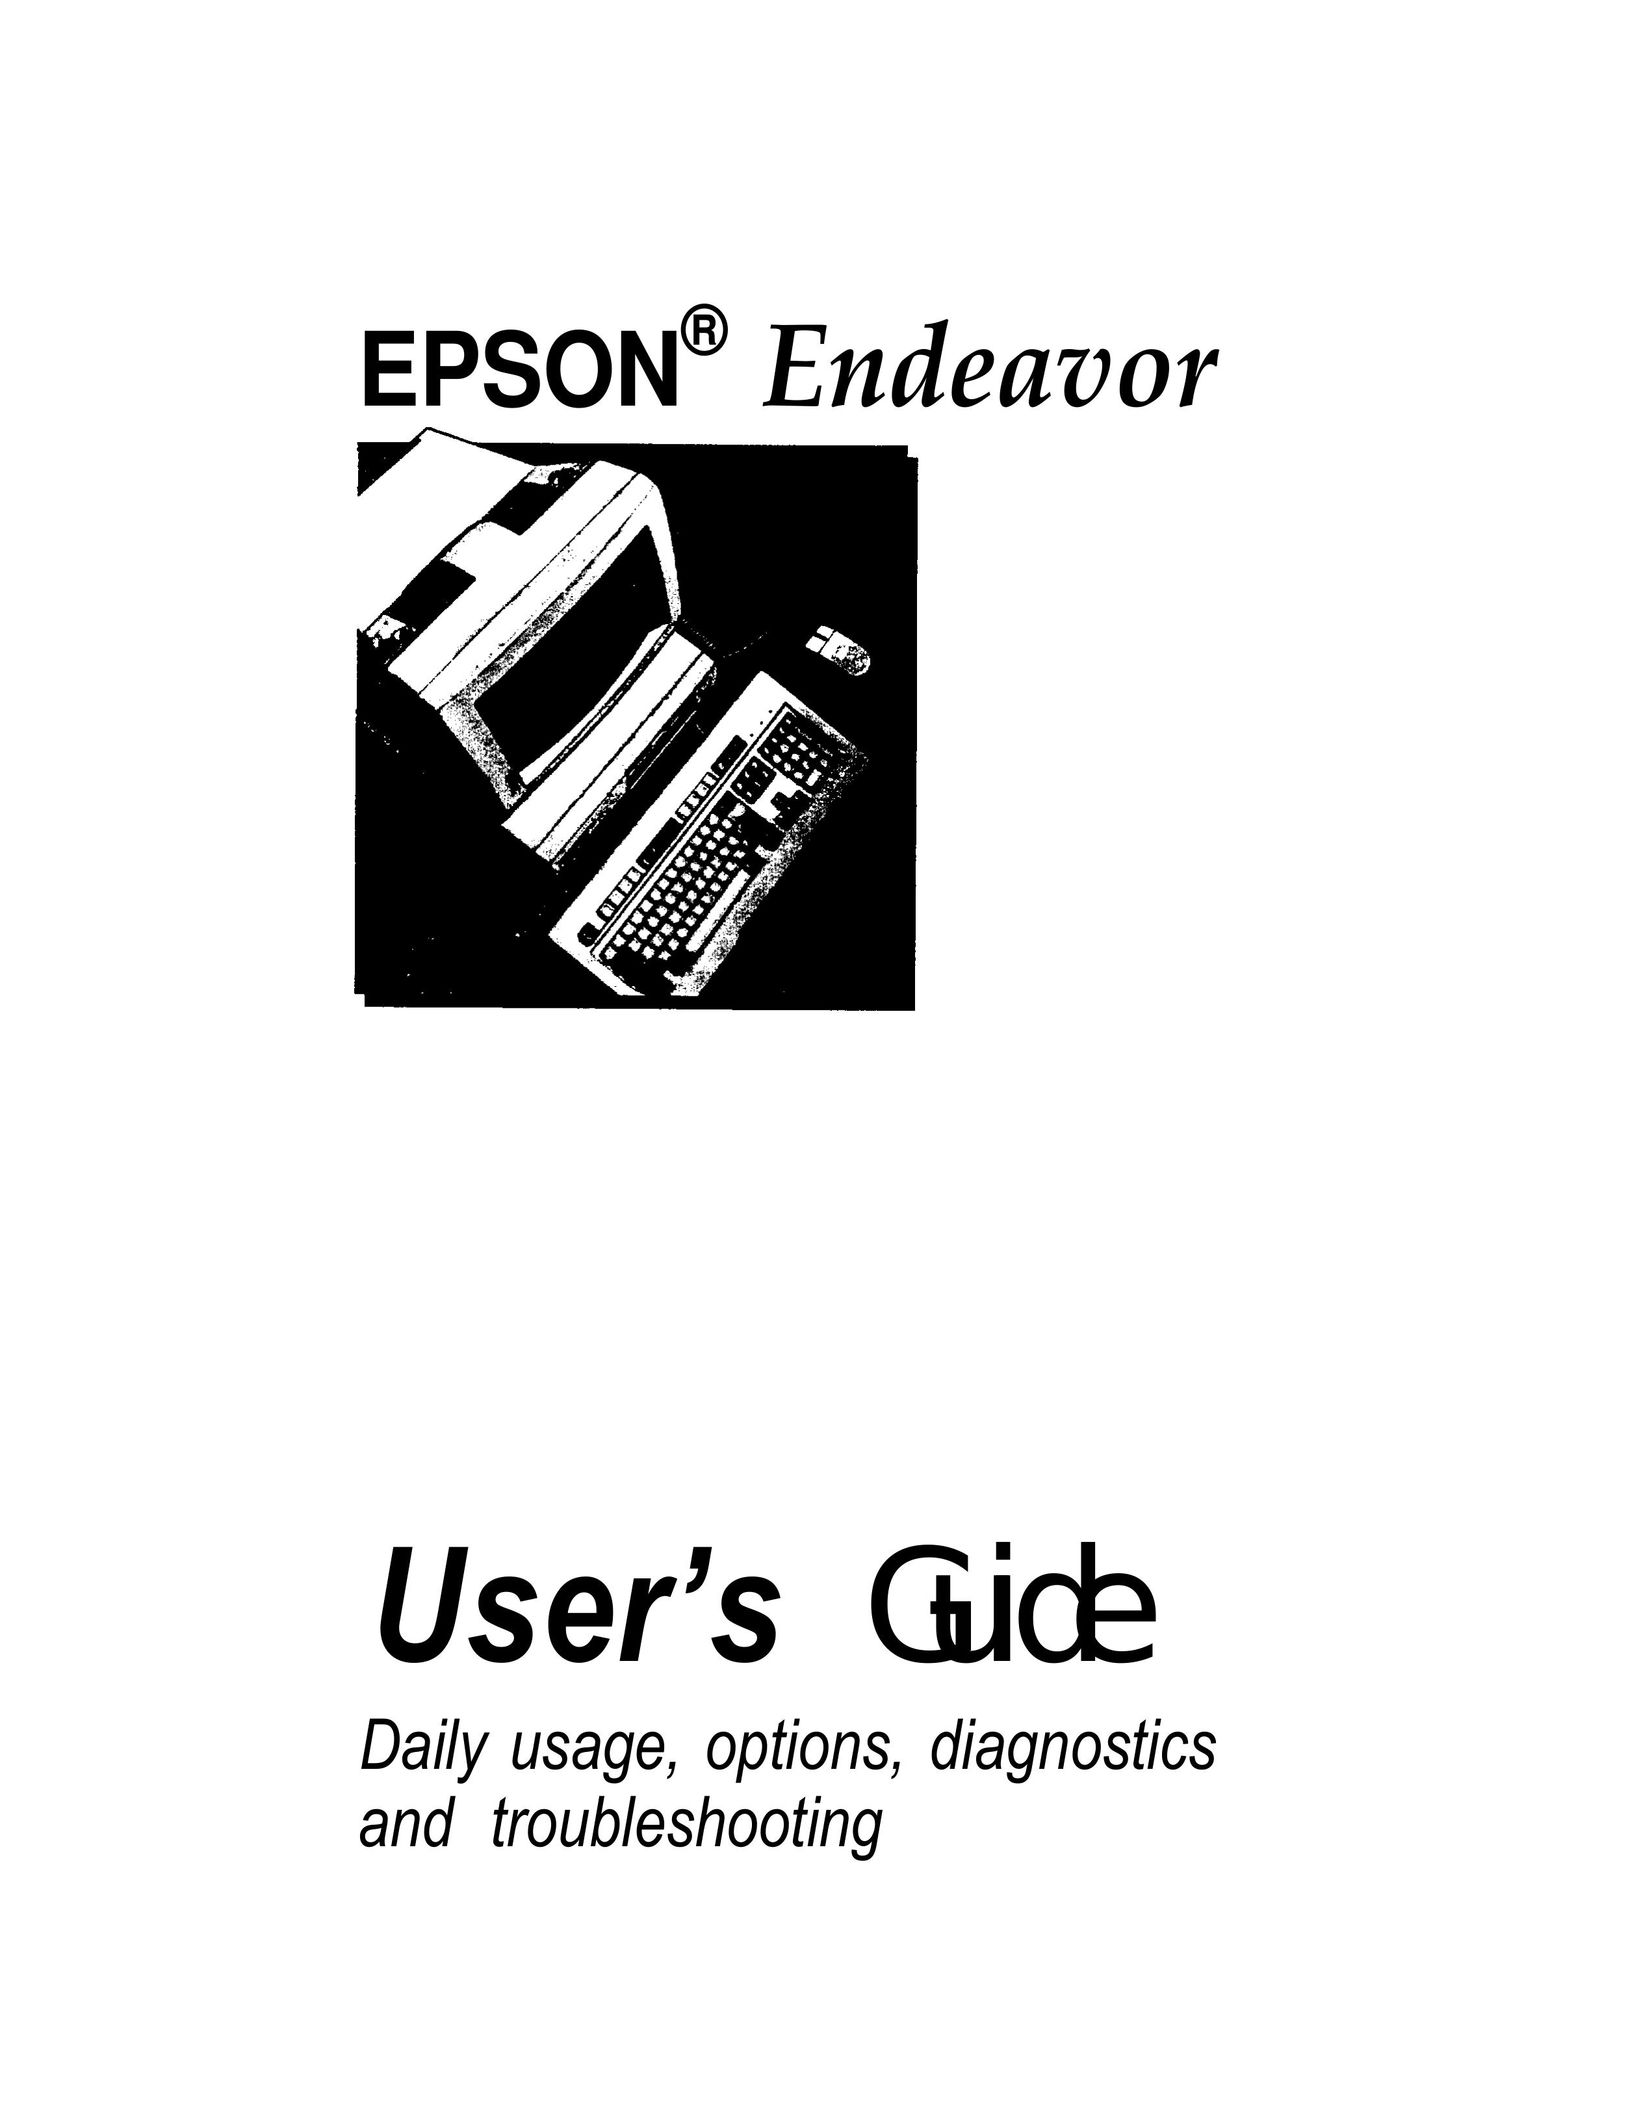 Epson Endeavor Personal Computer User Manual